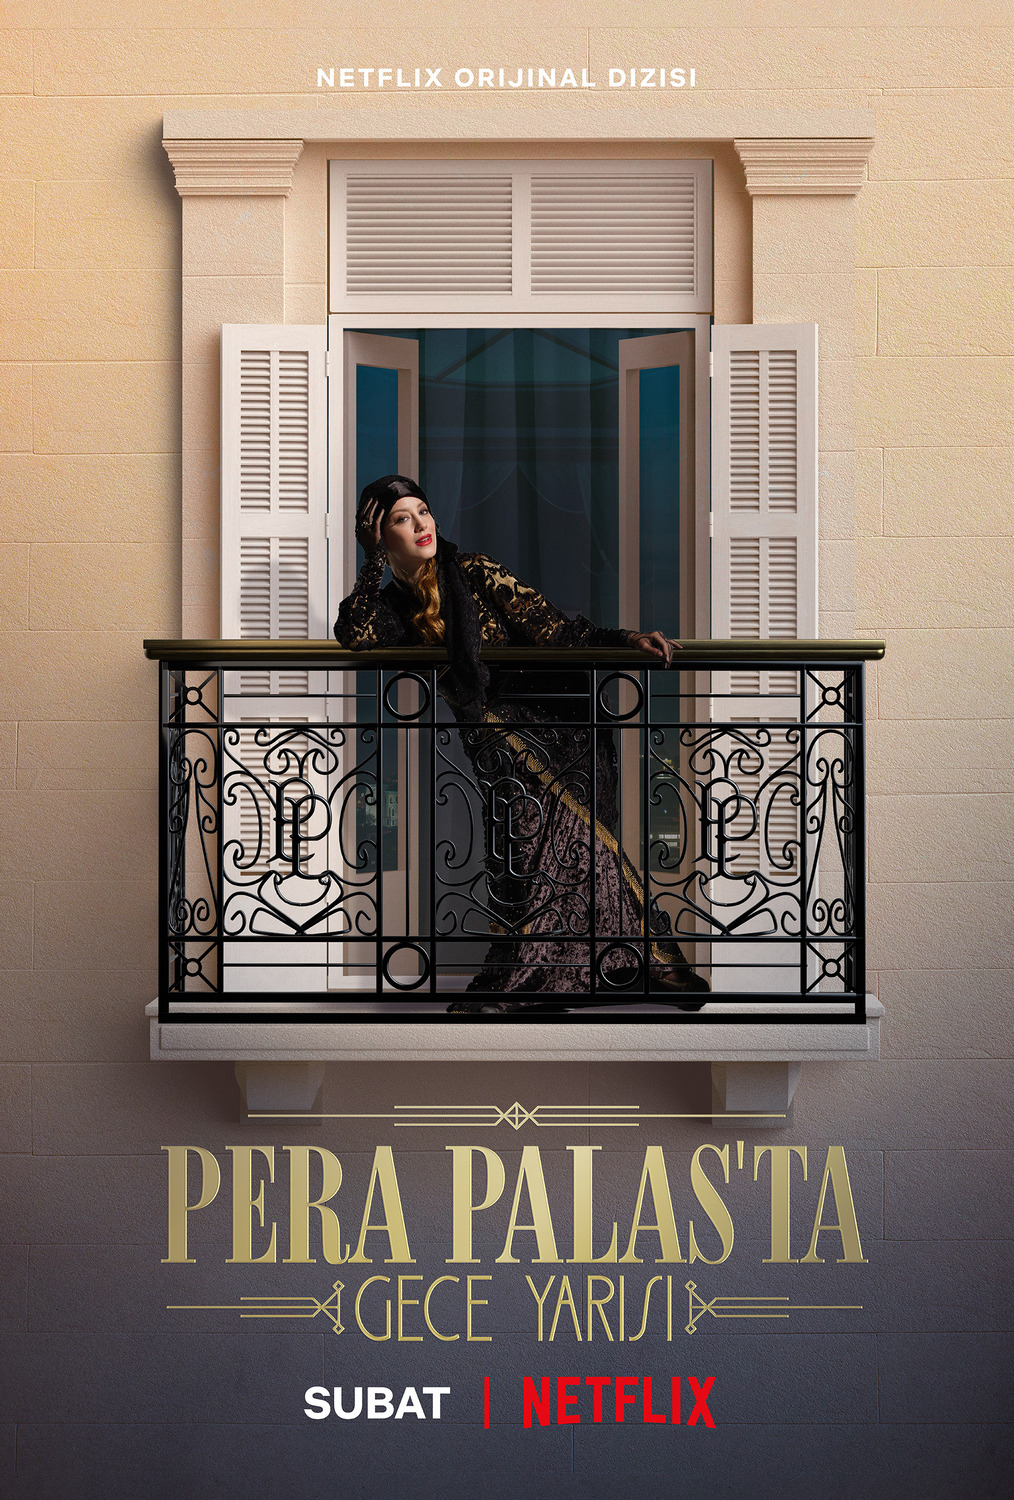 Extra Large TV Poster Image for Pera Palas'ta Gece Yarisi (#5 of 10)